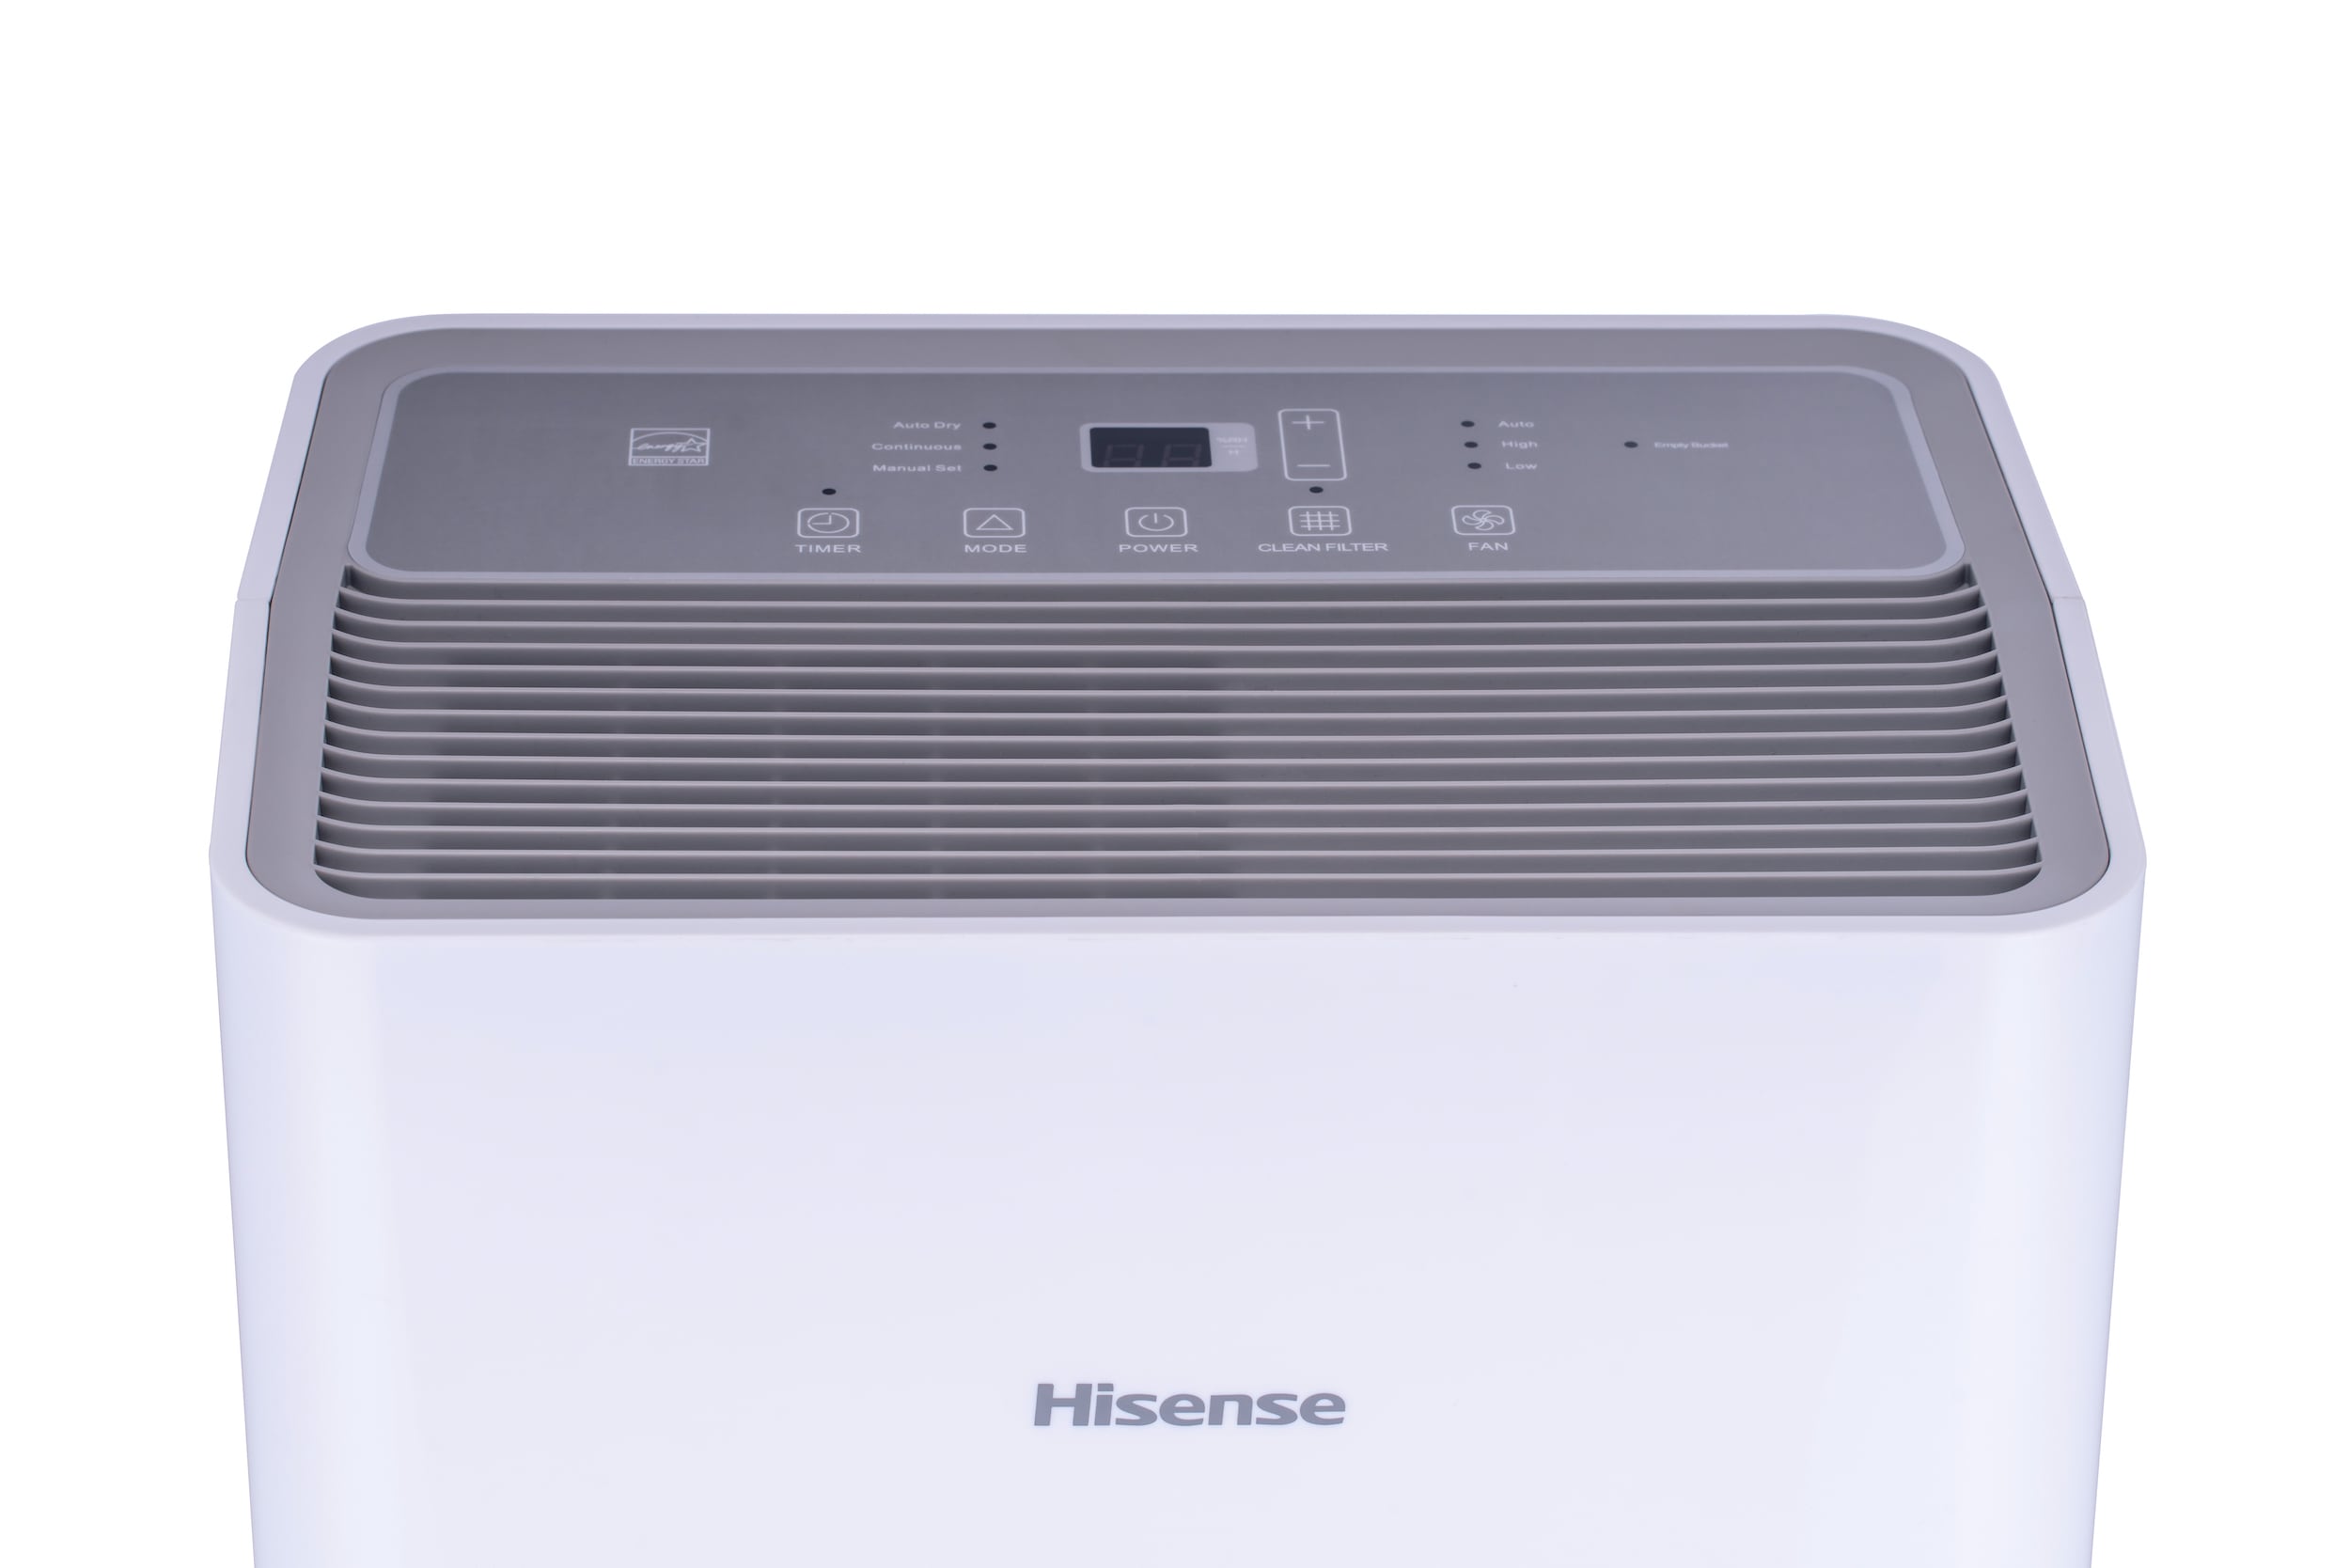 Hisense DM66D Series 50 UHD 4K Commercial Monitor 50DM66D B&H